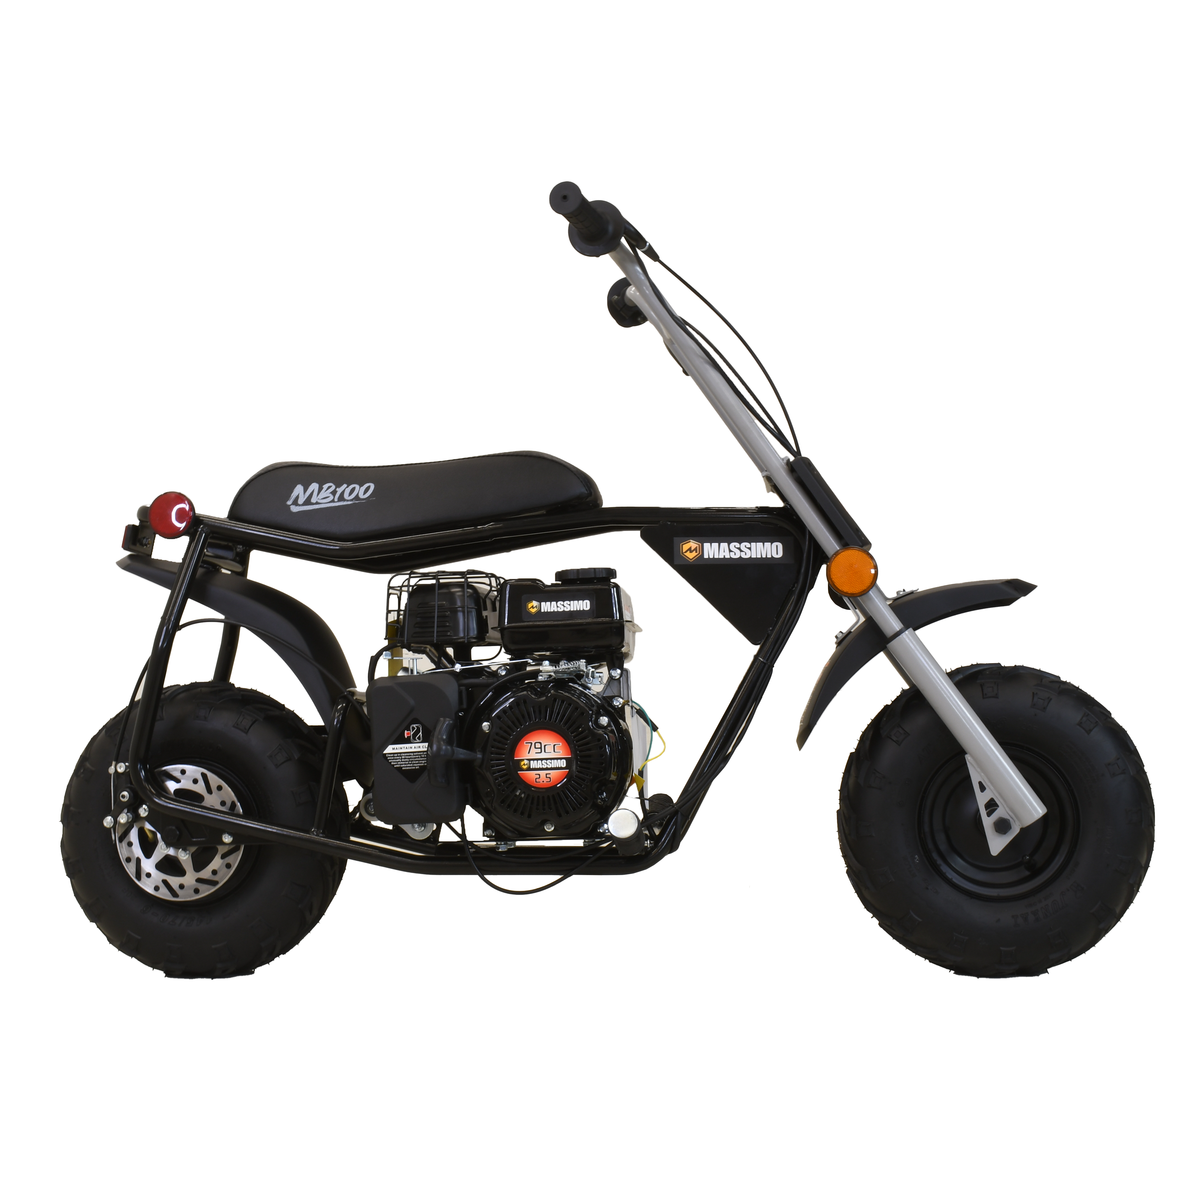 Massimo Motor MB100 2.5 HP 79cc 4-Stroke Gas Powered Mini Bike Motorcycle Trail Bike (Black) - image 3 of 8